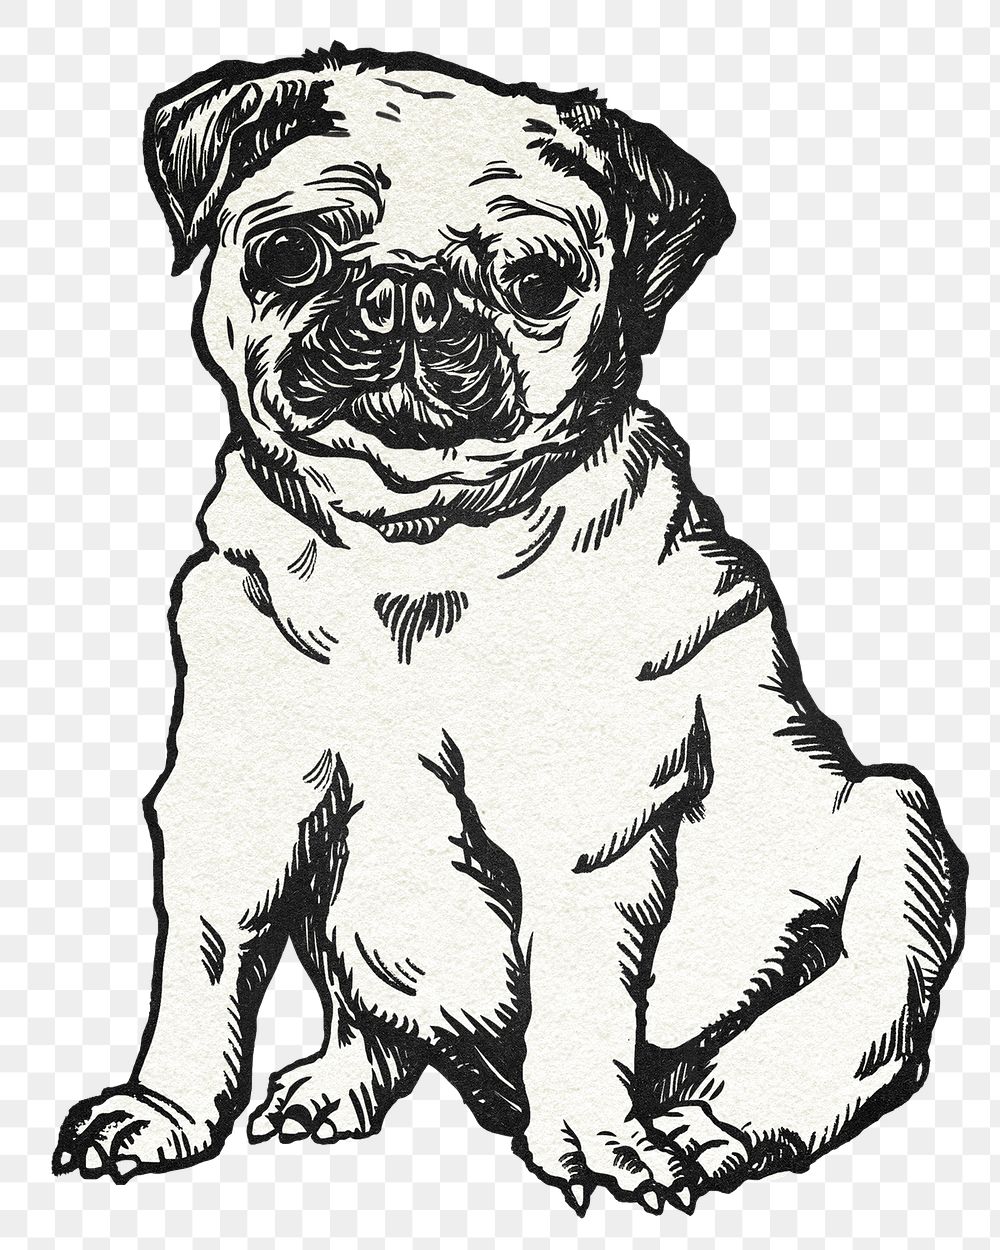 Png pug dog sticker in vintage style